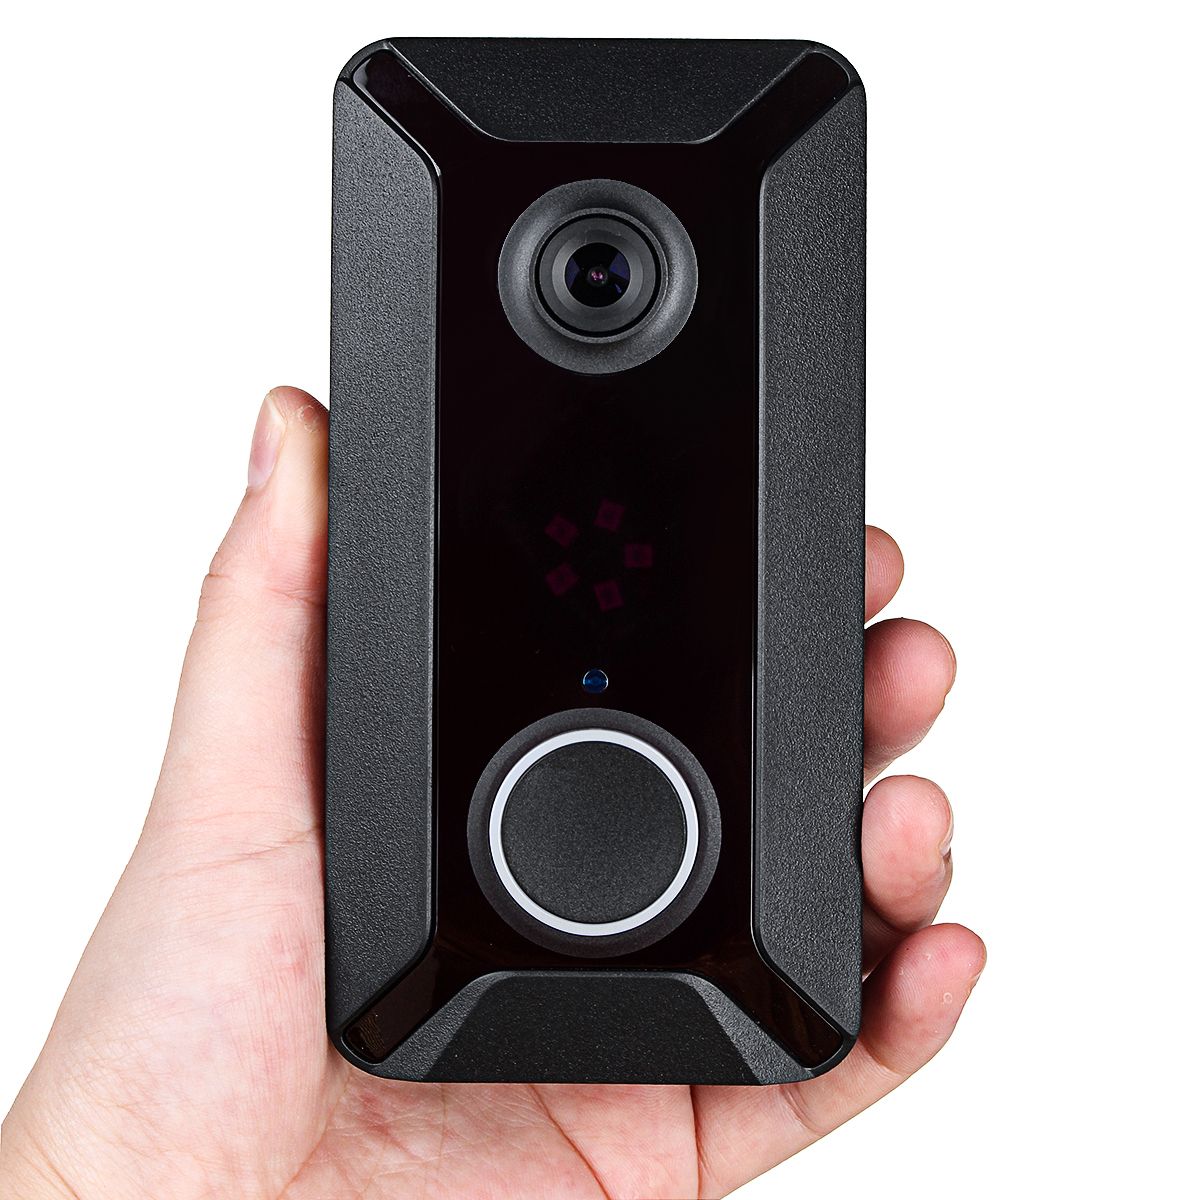 V6-720P-166deg-Wifi-Smart-Wireless-Video-Doorbell-Movement-Detecting-Rainproof-1562860